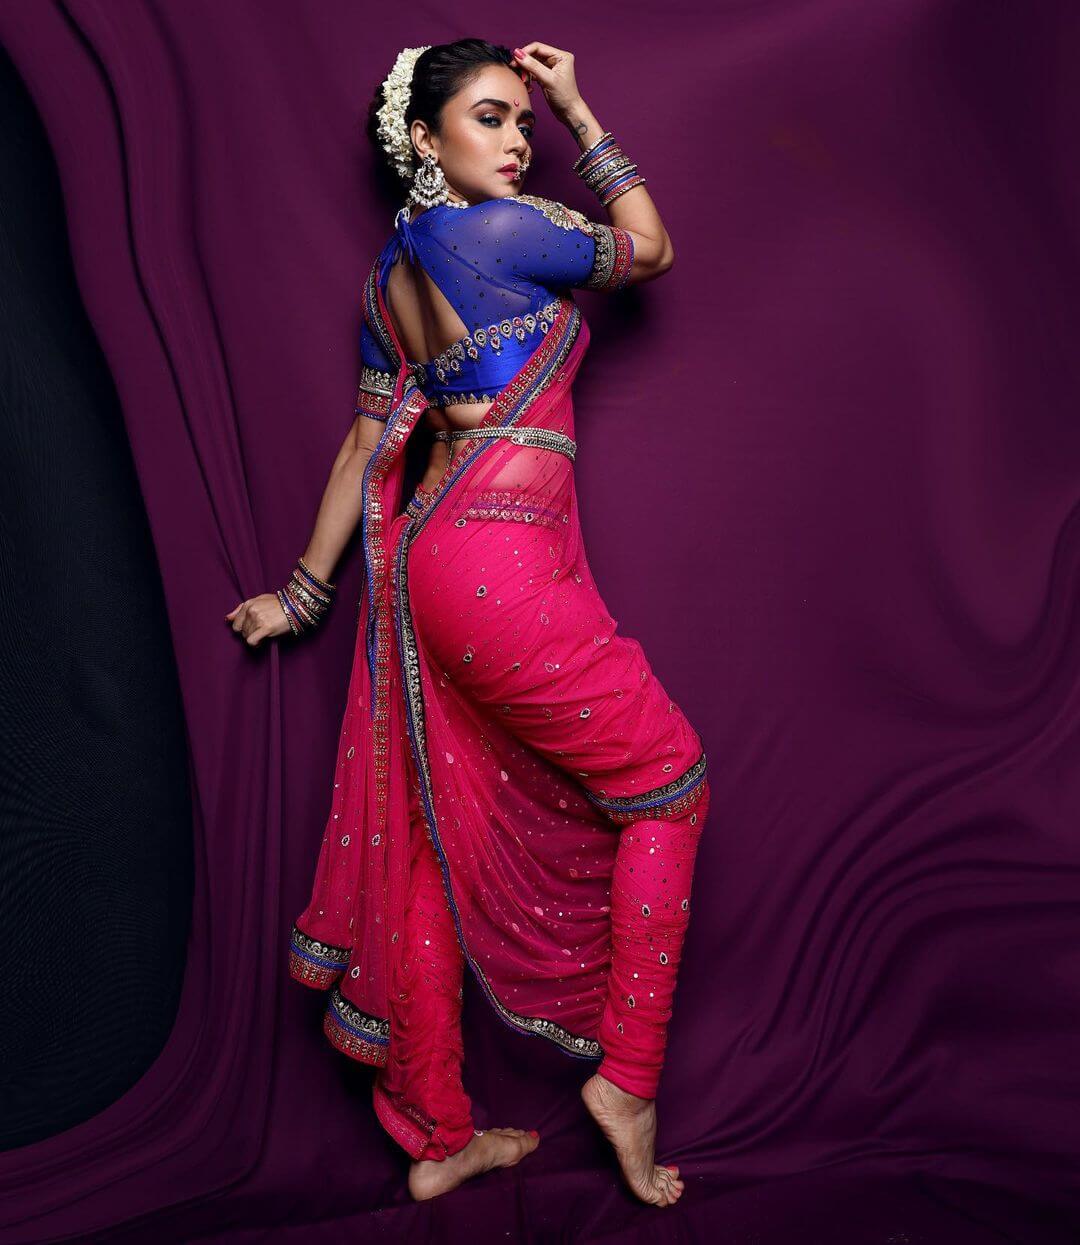 Amruta Khanvilkar In Pink Saree And A Blue Blouse